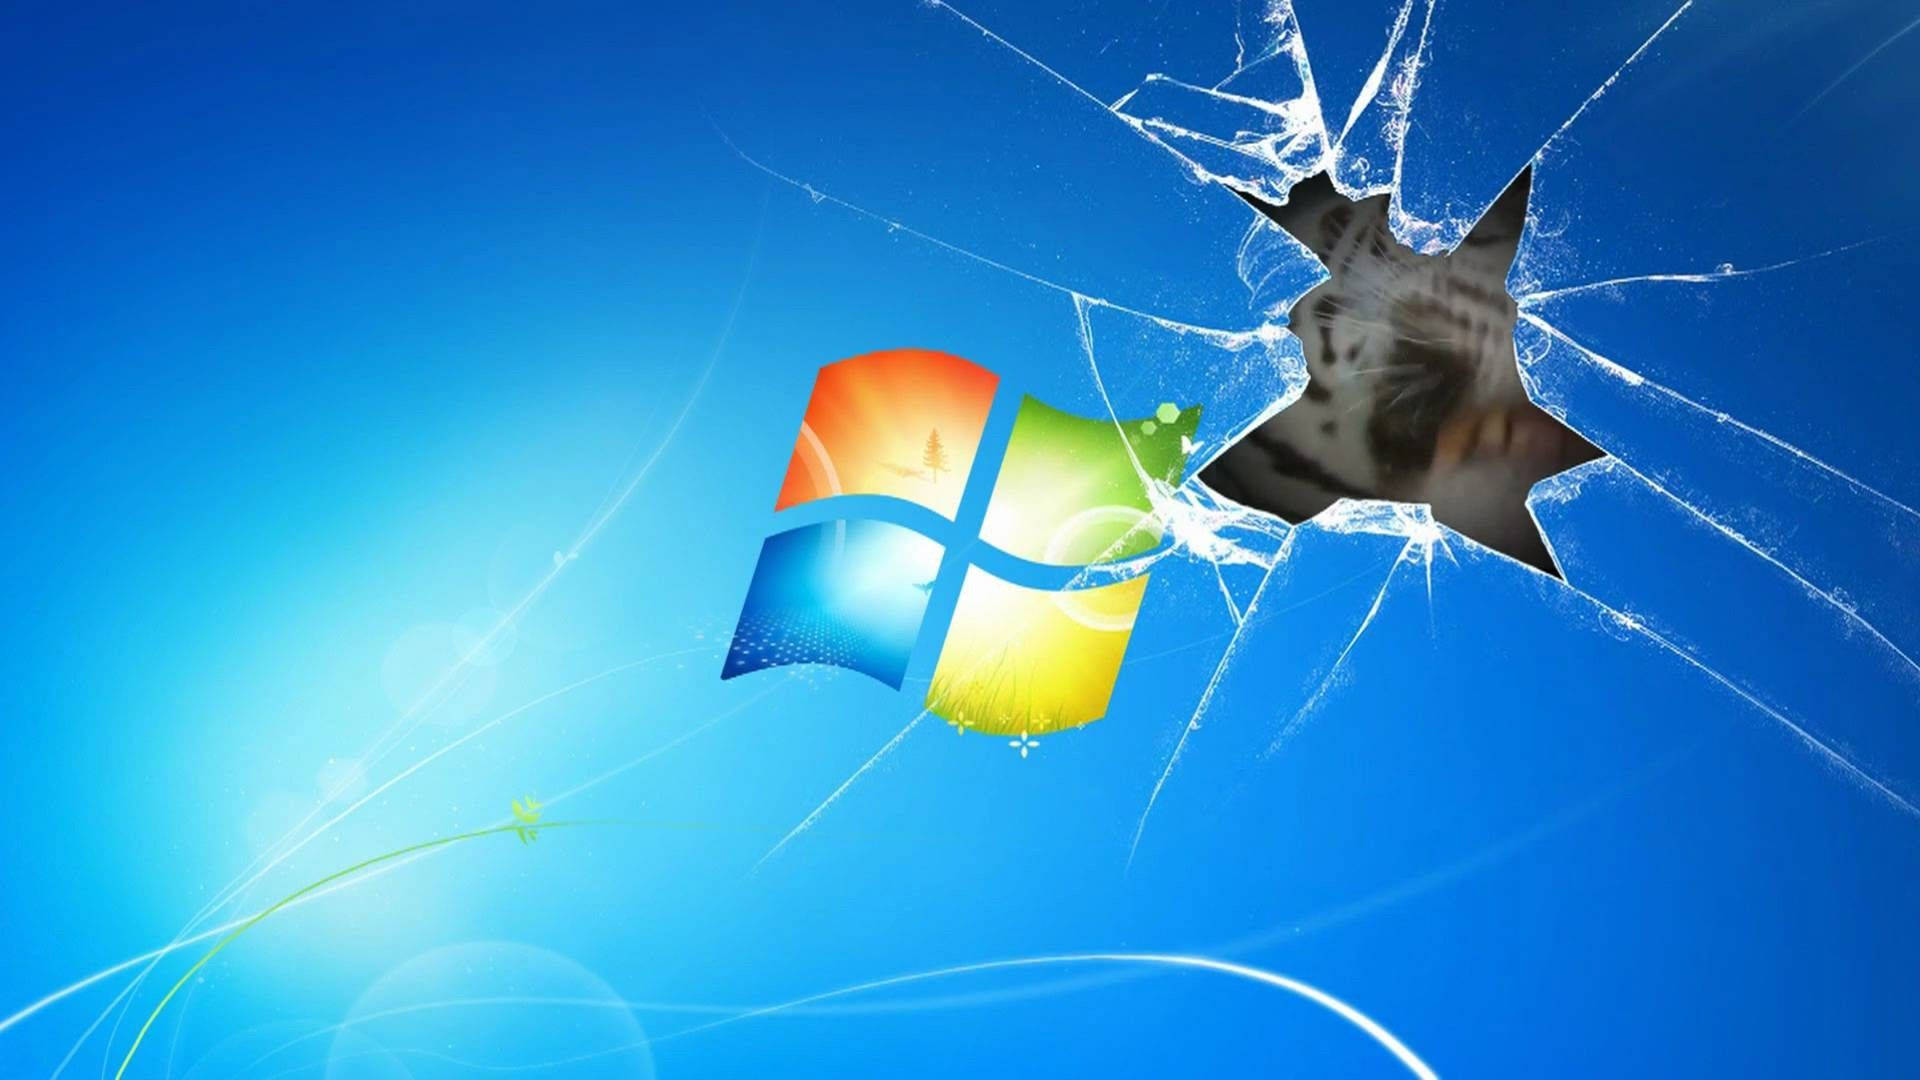 Windows 7 Animated Hd